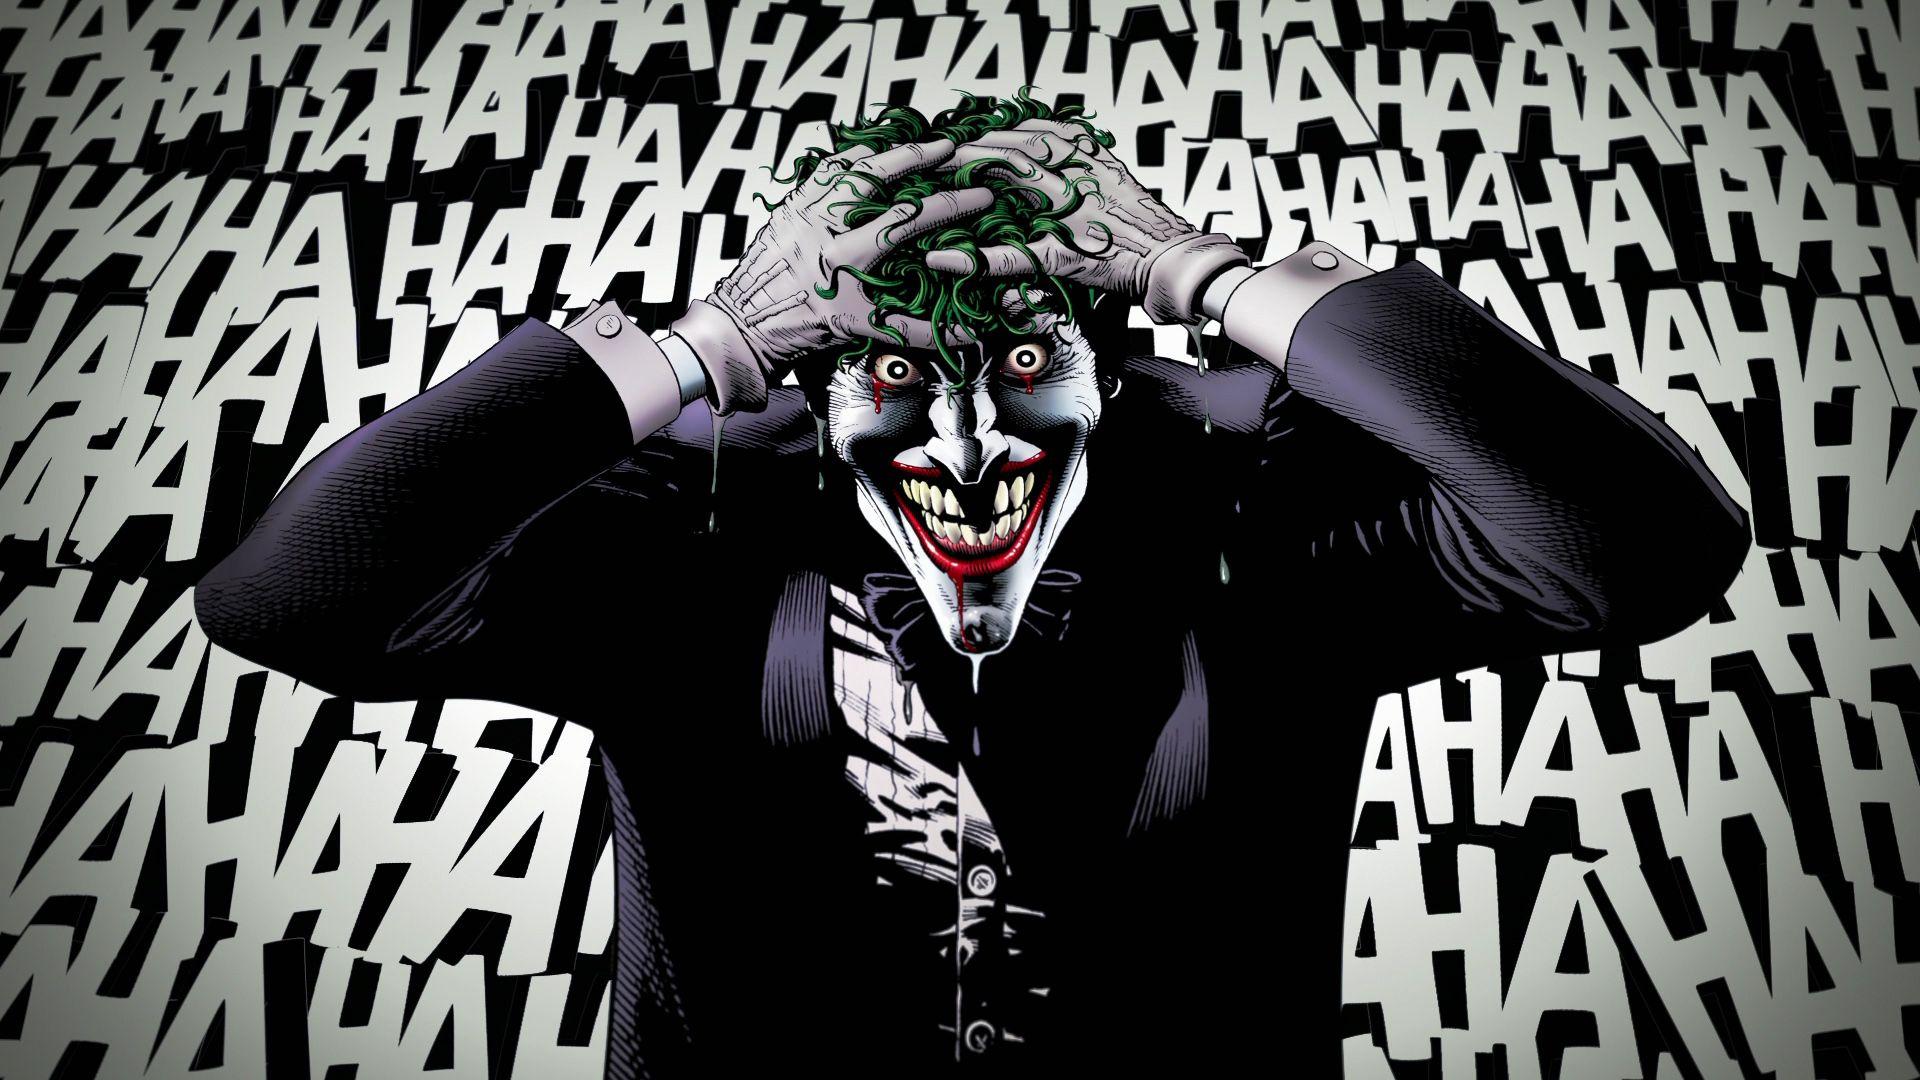 Joker HD Wallpaper and Background